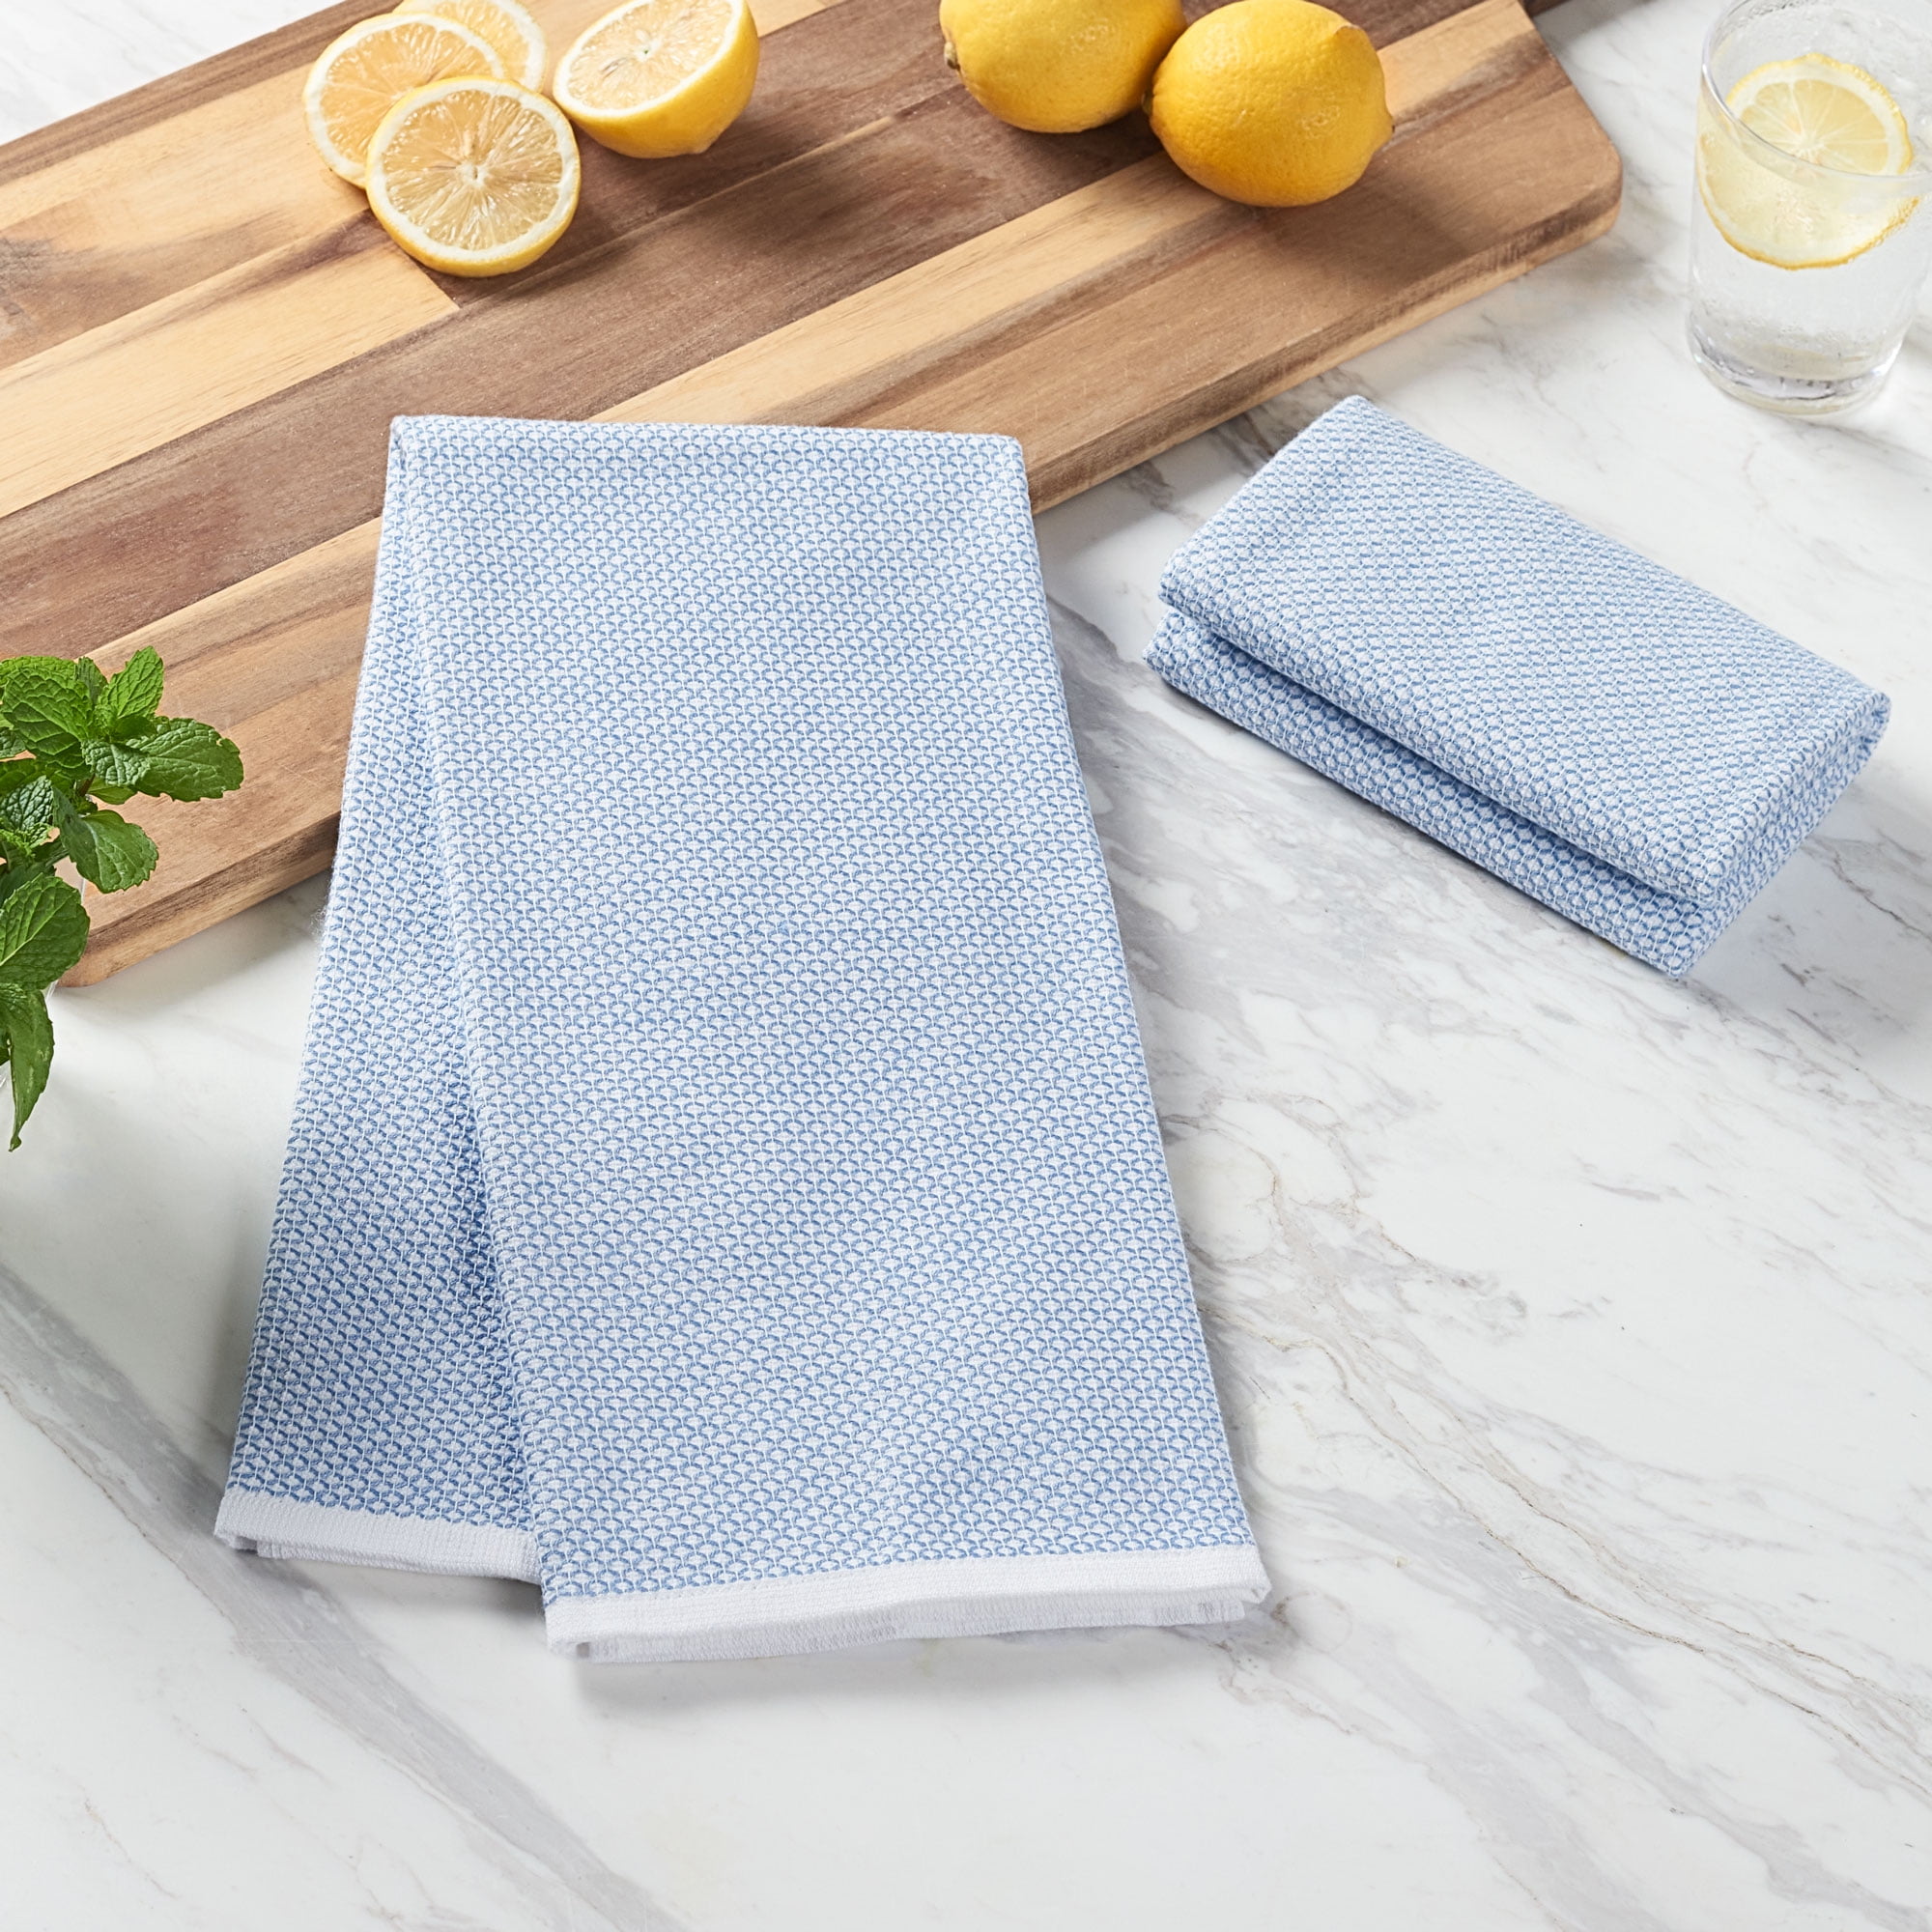 Buy Blue Kitchen Linen for Home & Kitchen by AAZEEM Online